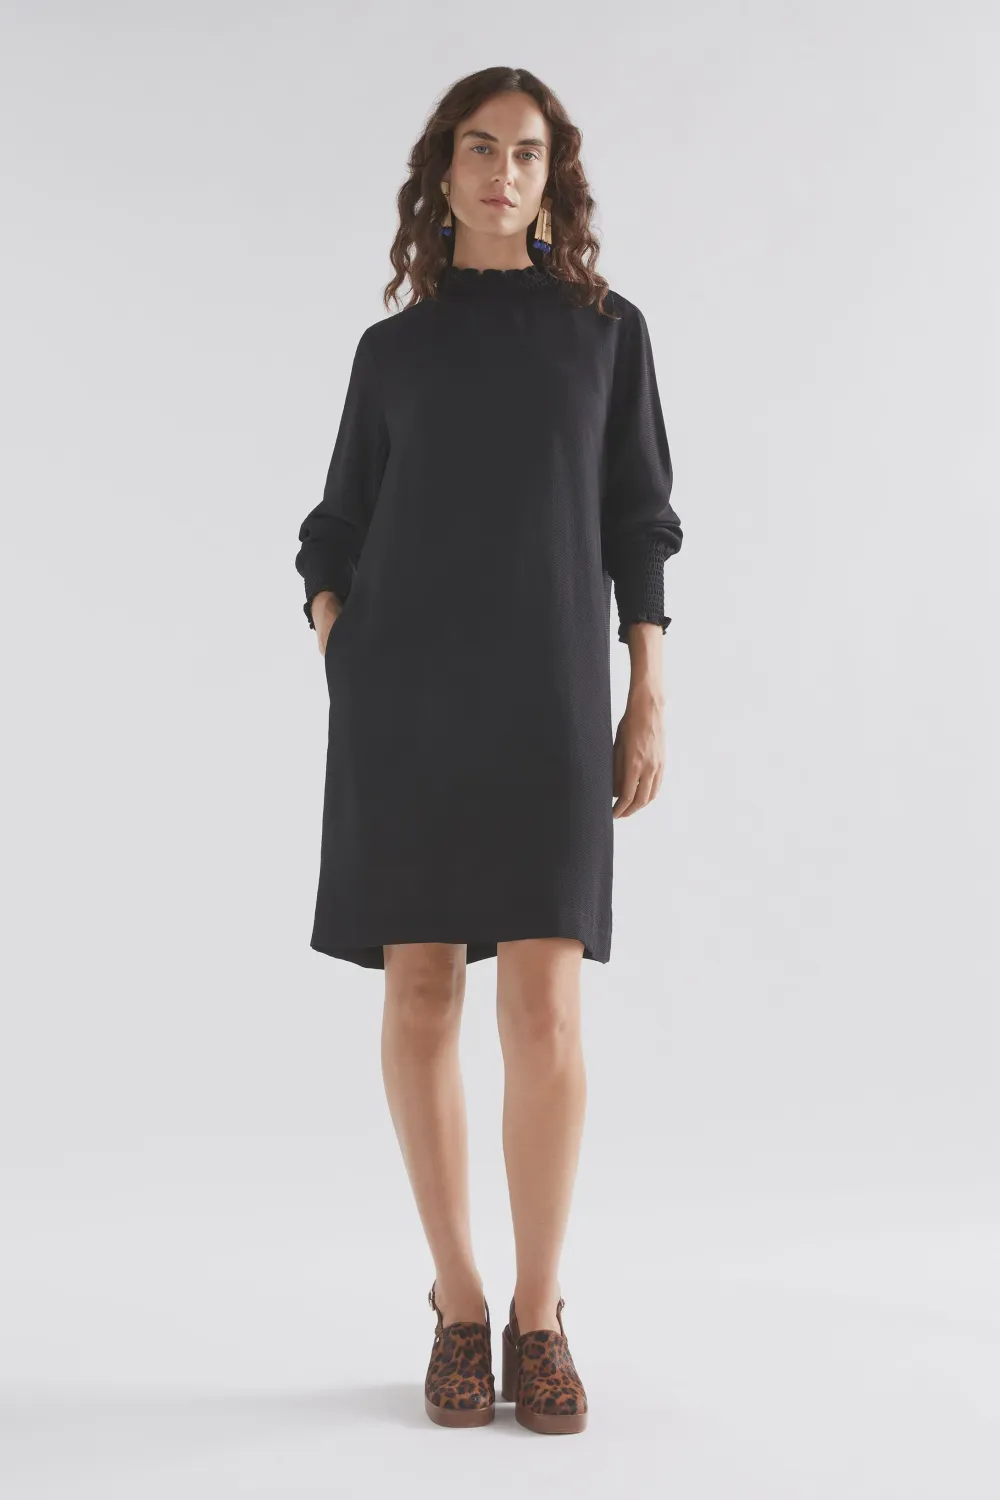 Veda Dress, Colour: Black, Size: 6